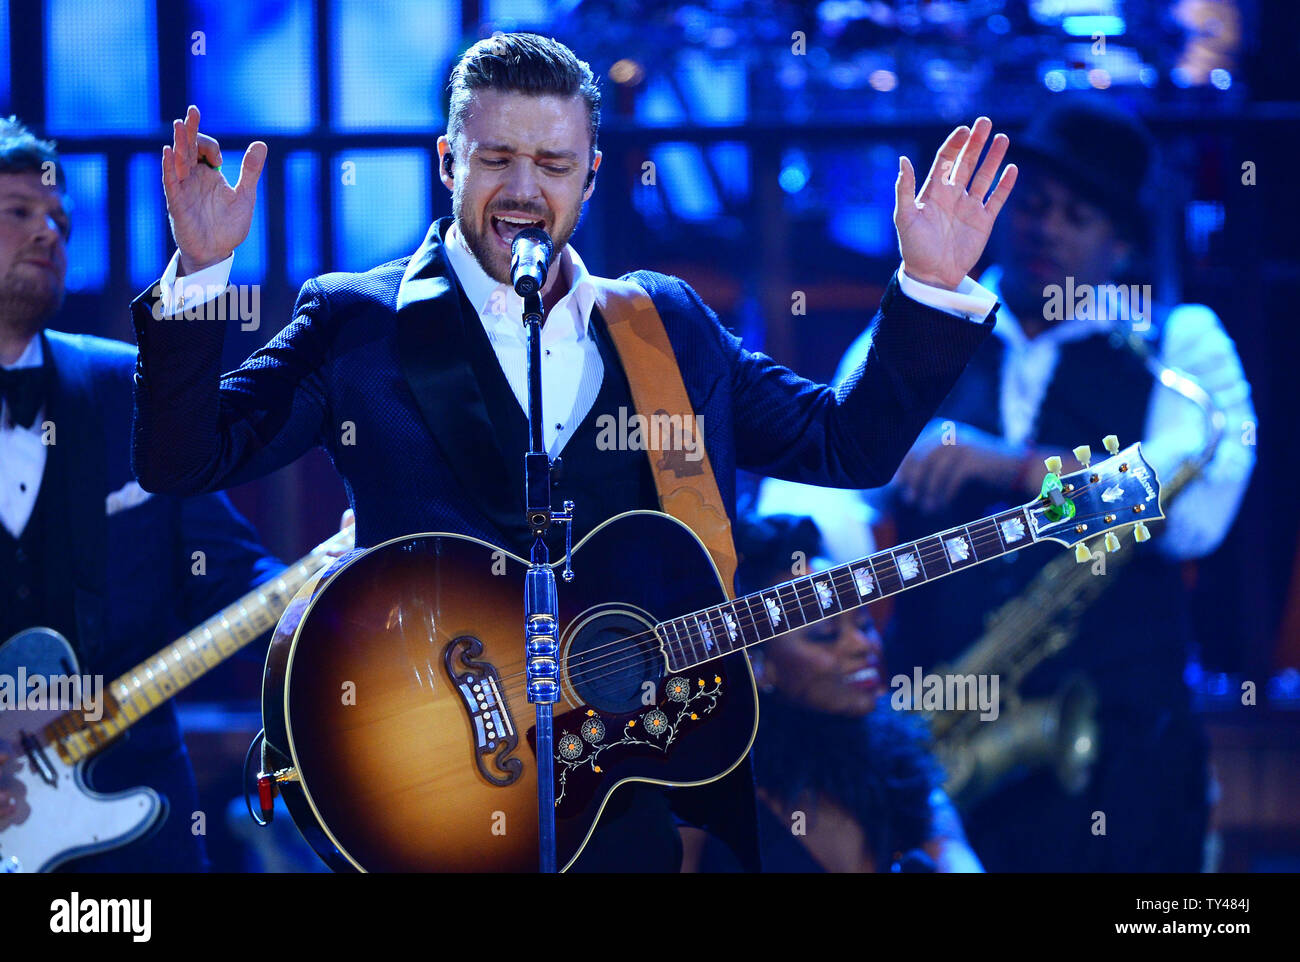 LOS ANGELES, NOV 24 - Justin Timberlake at the 2013 American Music